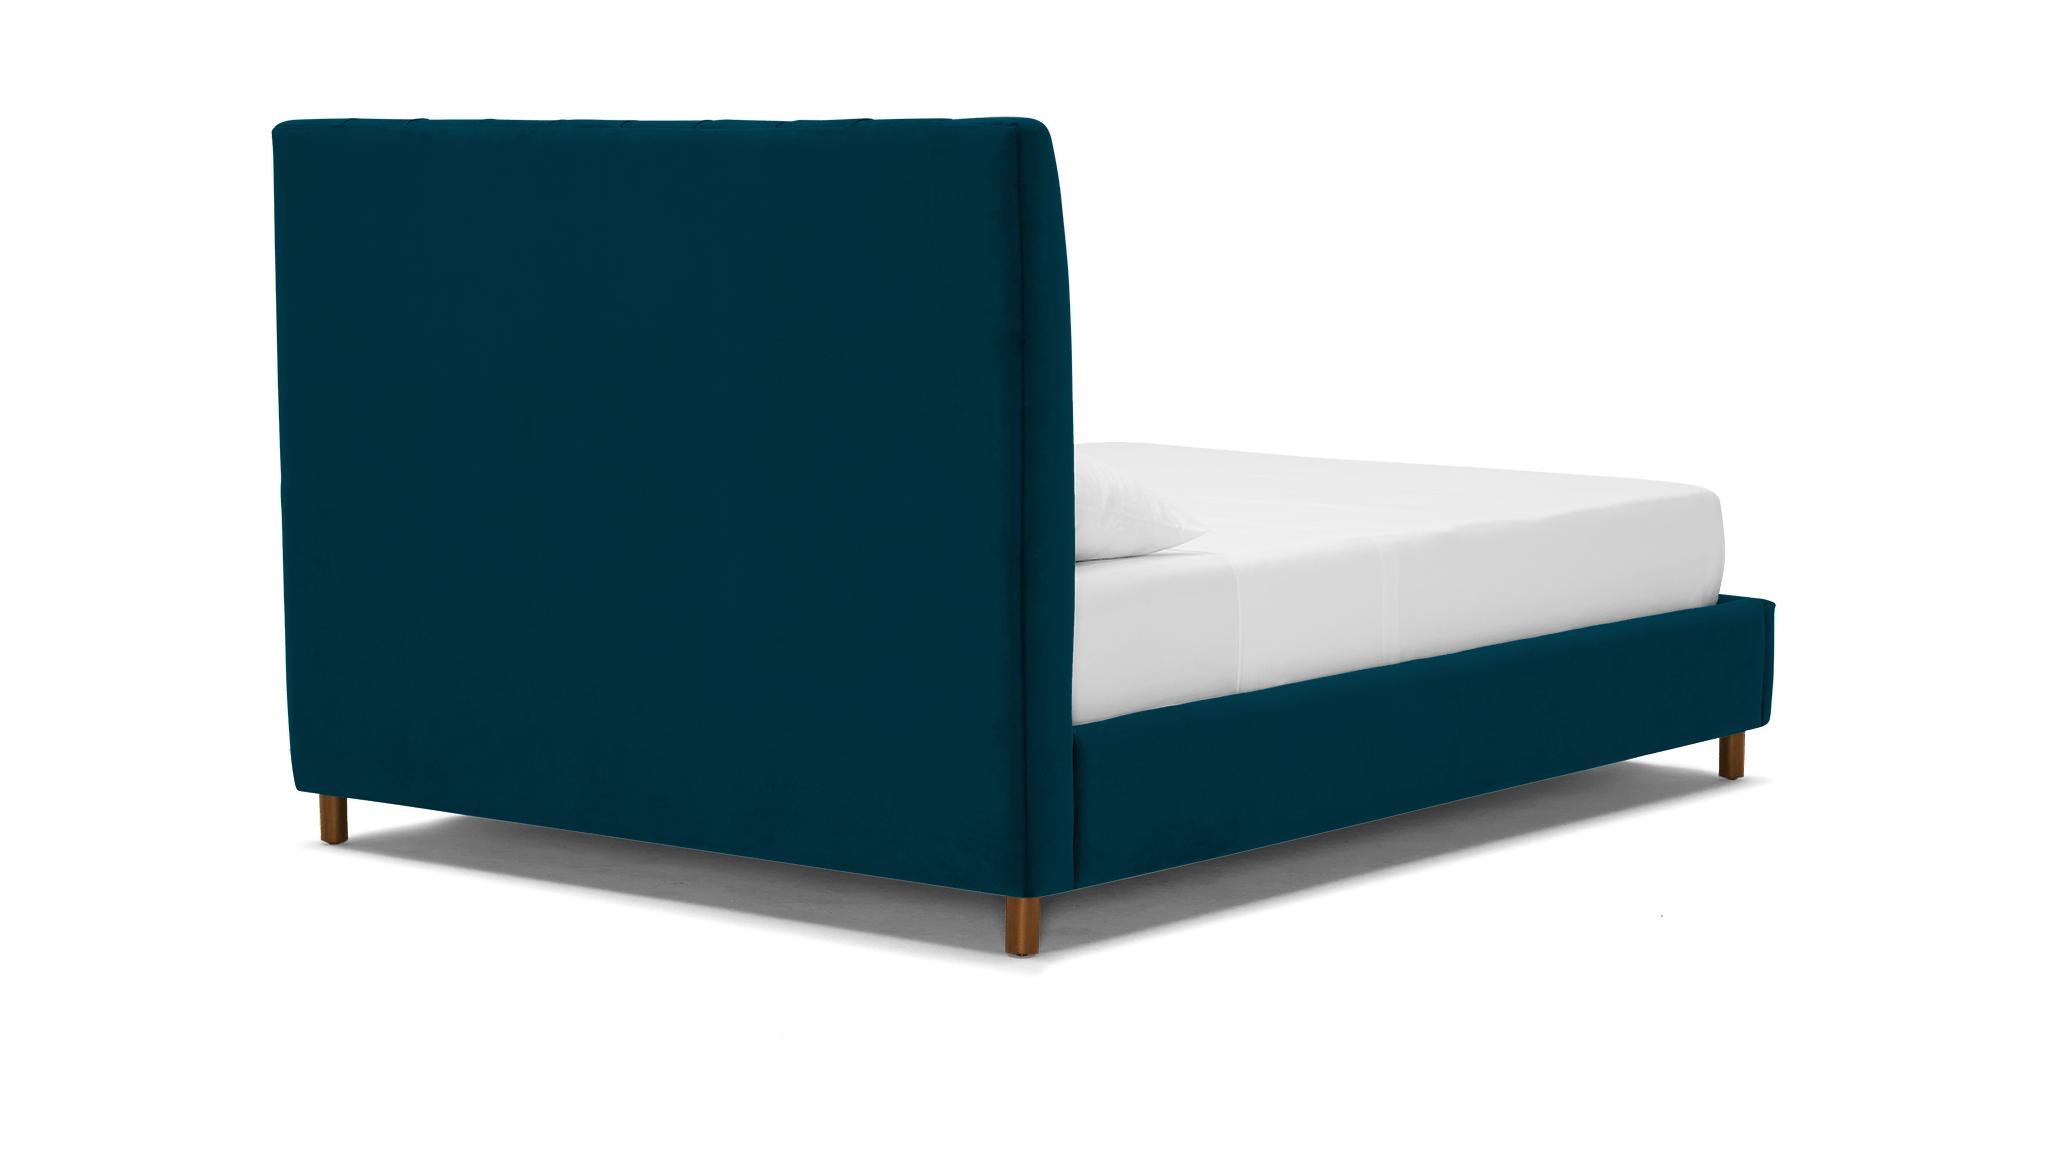 Blue Lotta Mid Century Modern Bed - Key Largo Zenith Teal - Mocha - Queen - Image 3